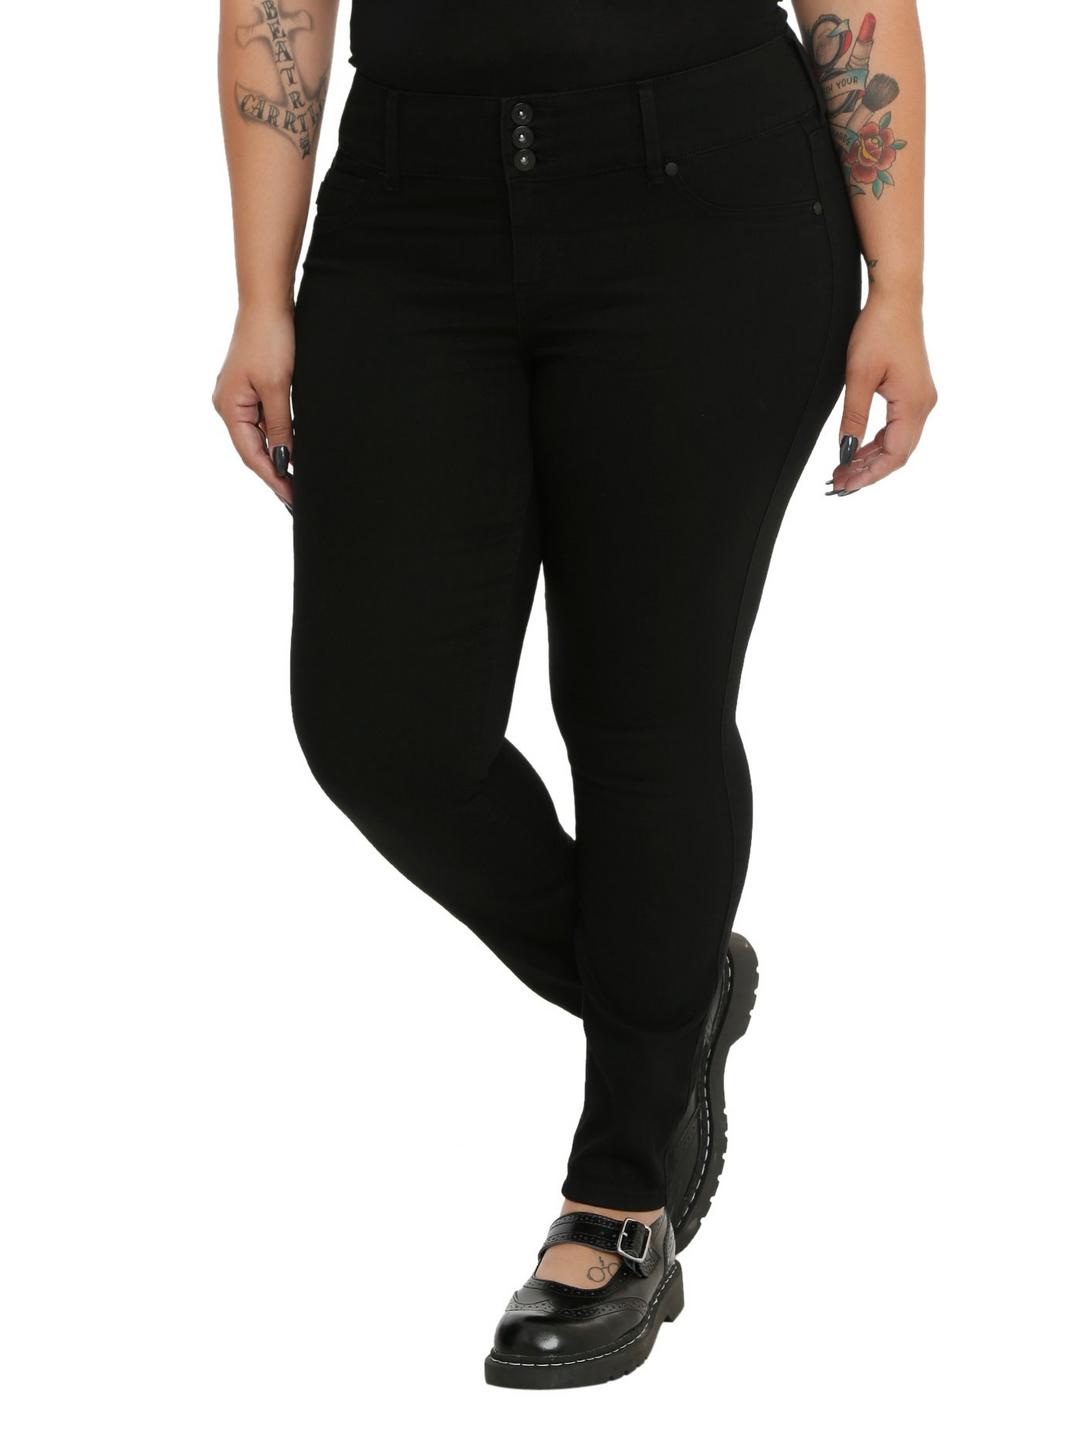 LOVEsick Black Super Skinny Jeans Plus Size, BLACK, hi-res